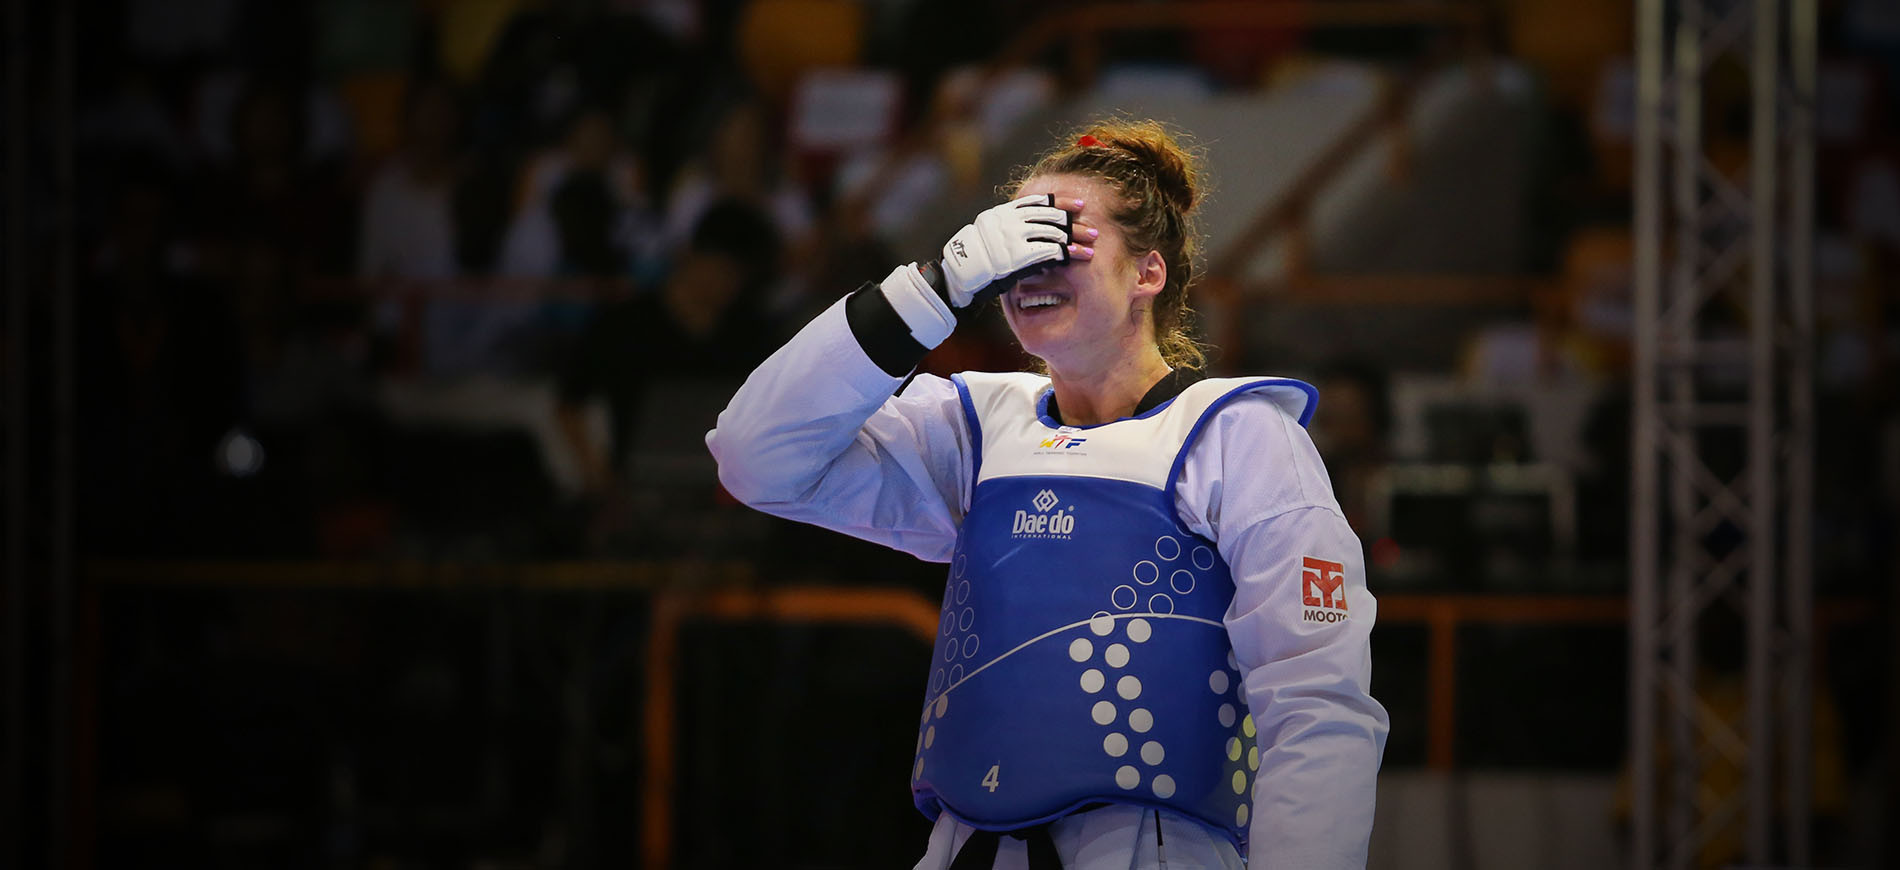 Bianca Walkden capped a brilliant season with victory ©World Taekwondo